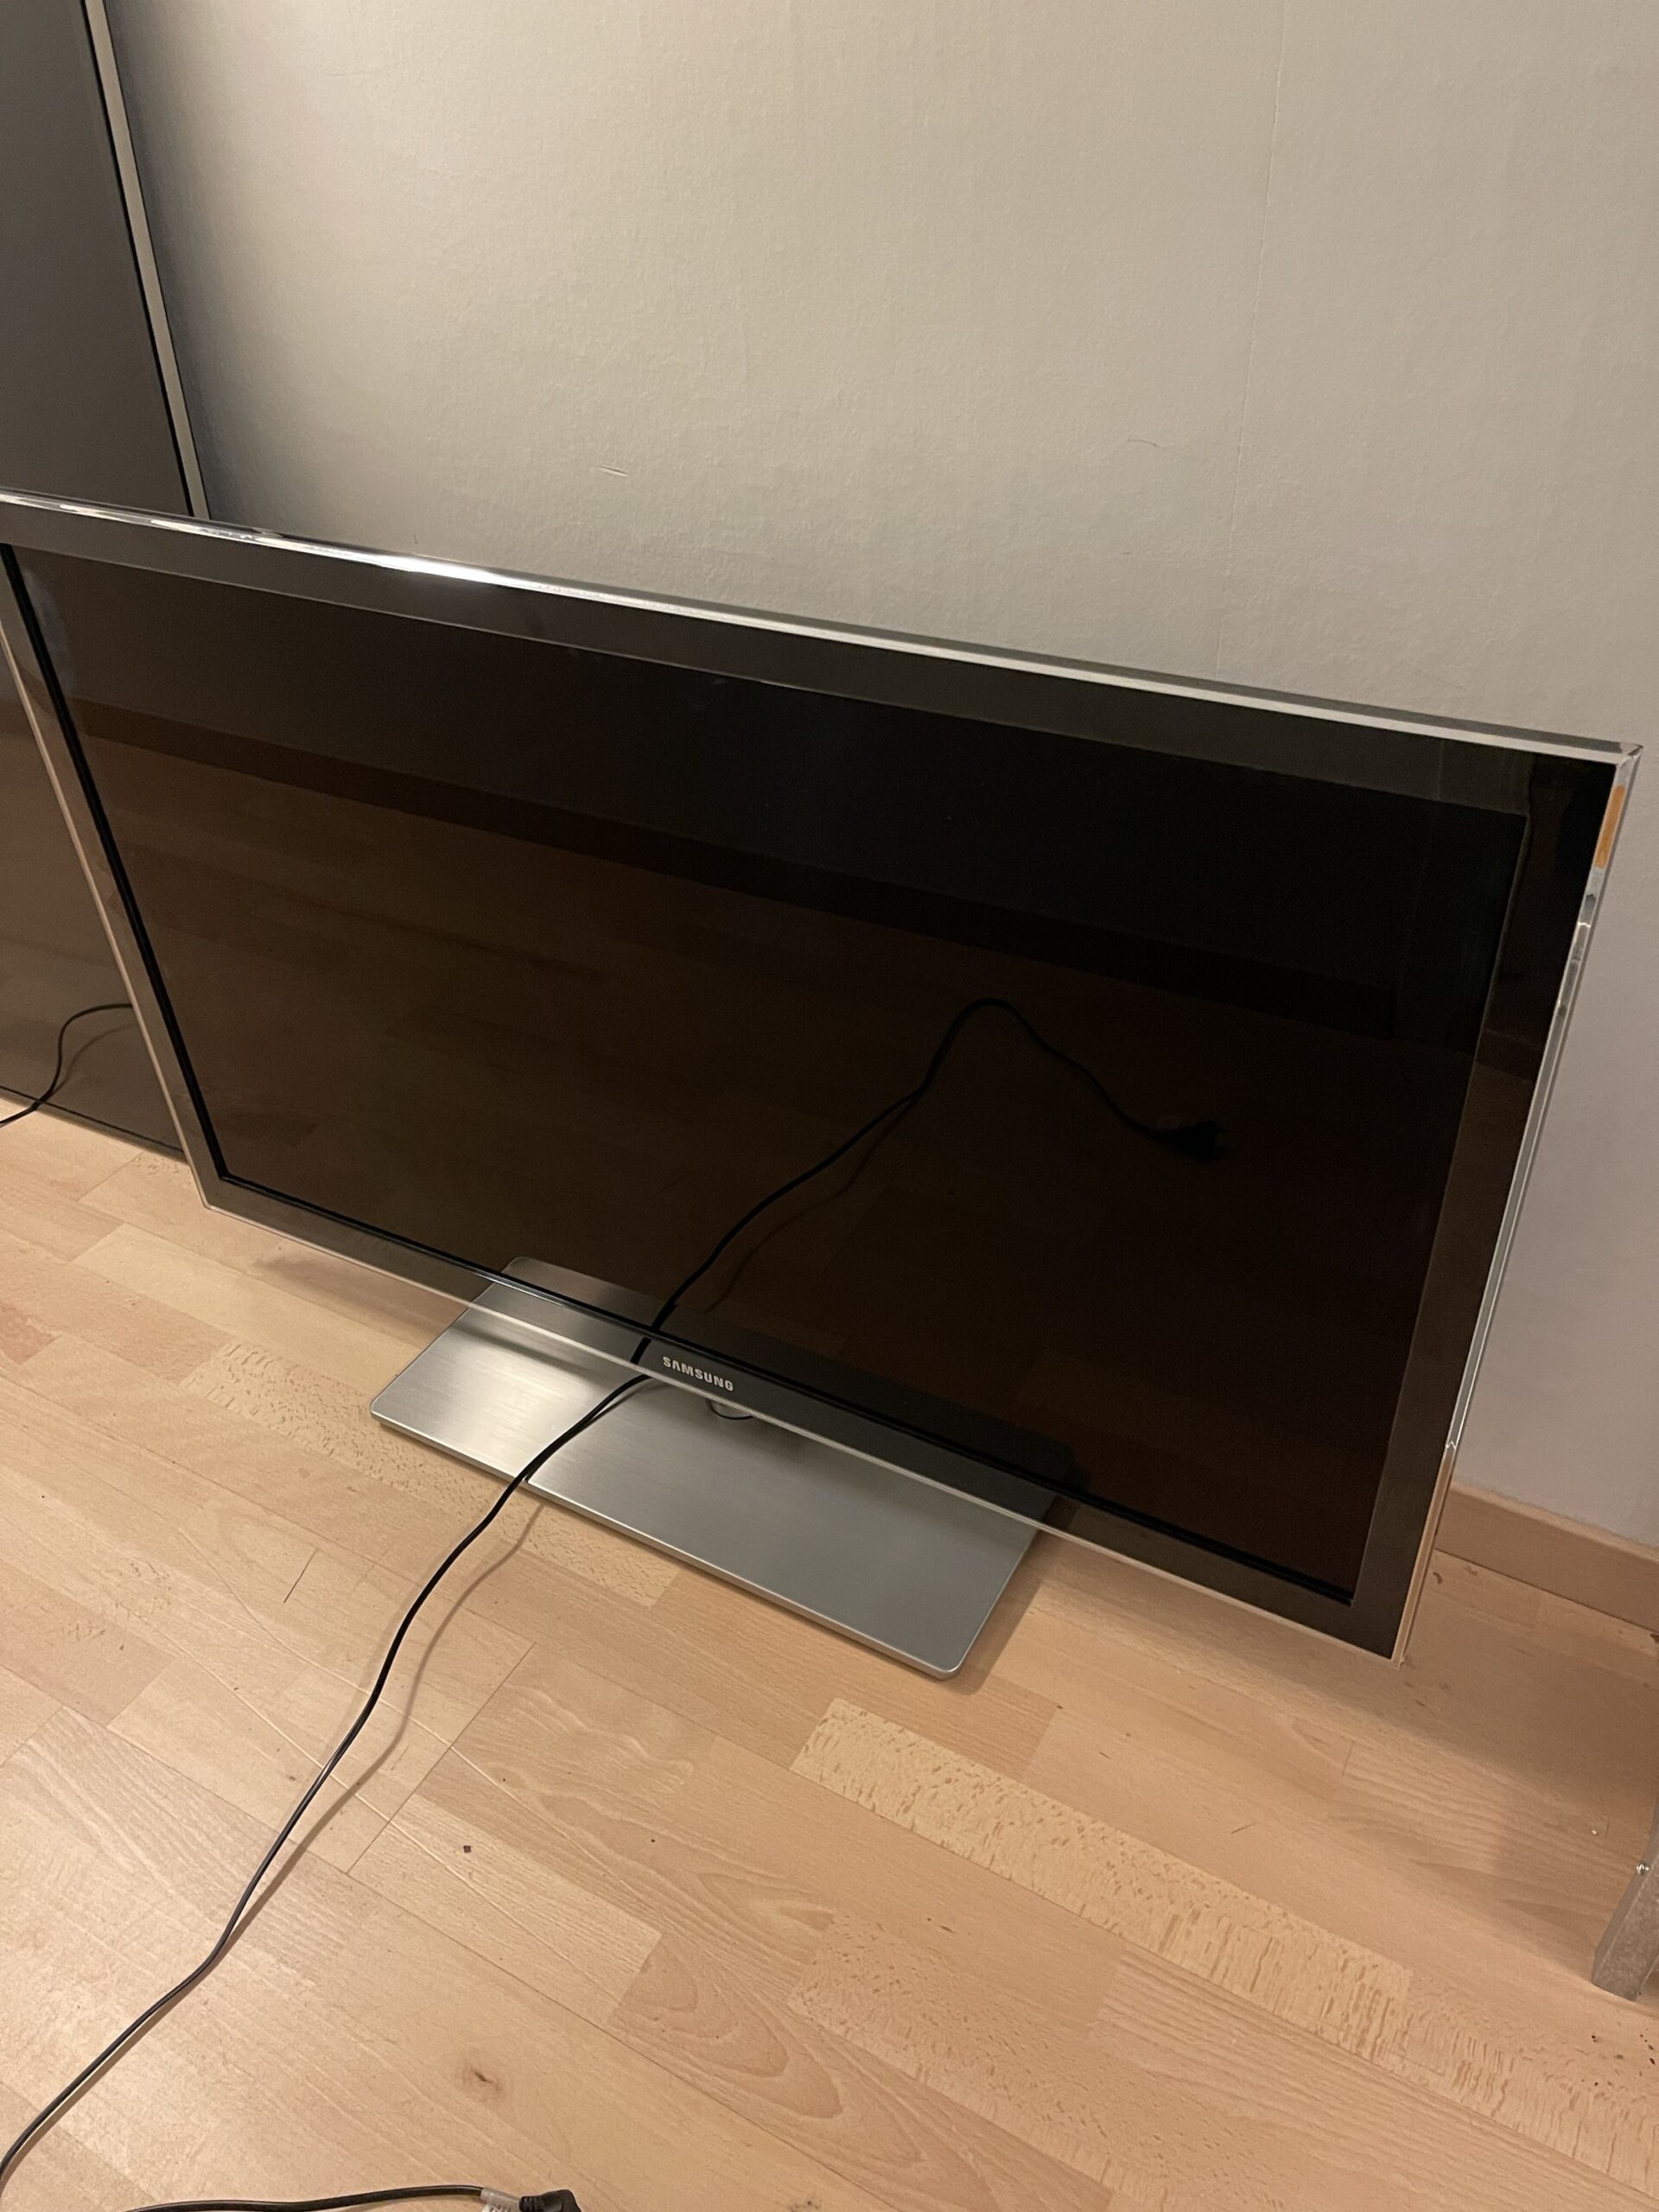 Samsung 46″ Smart TV FULL HD – 100Hz Telebit